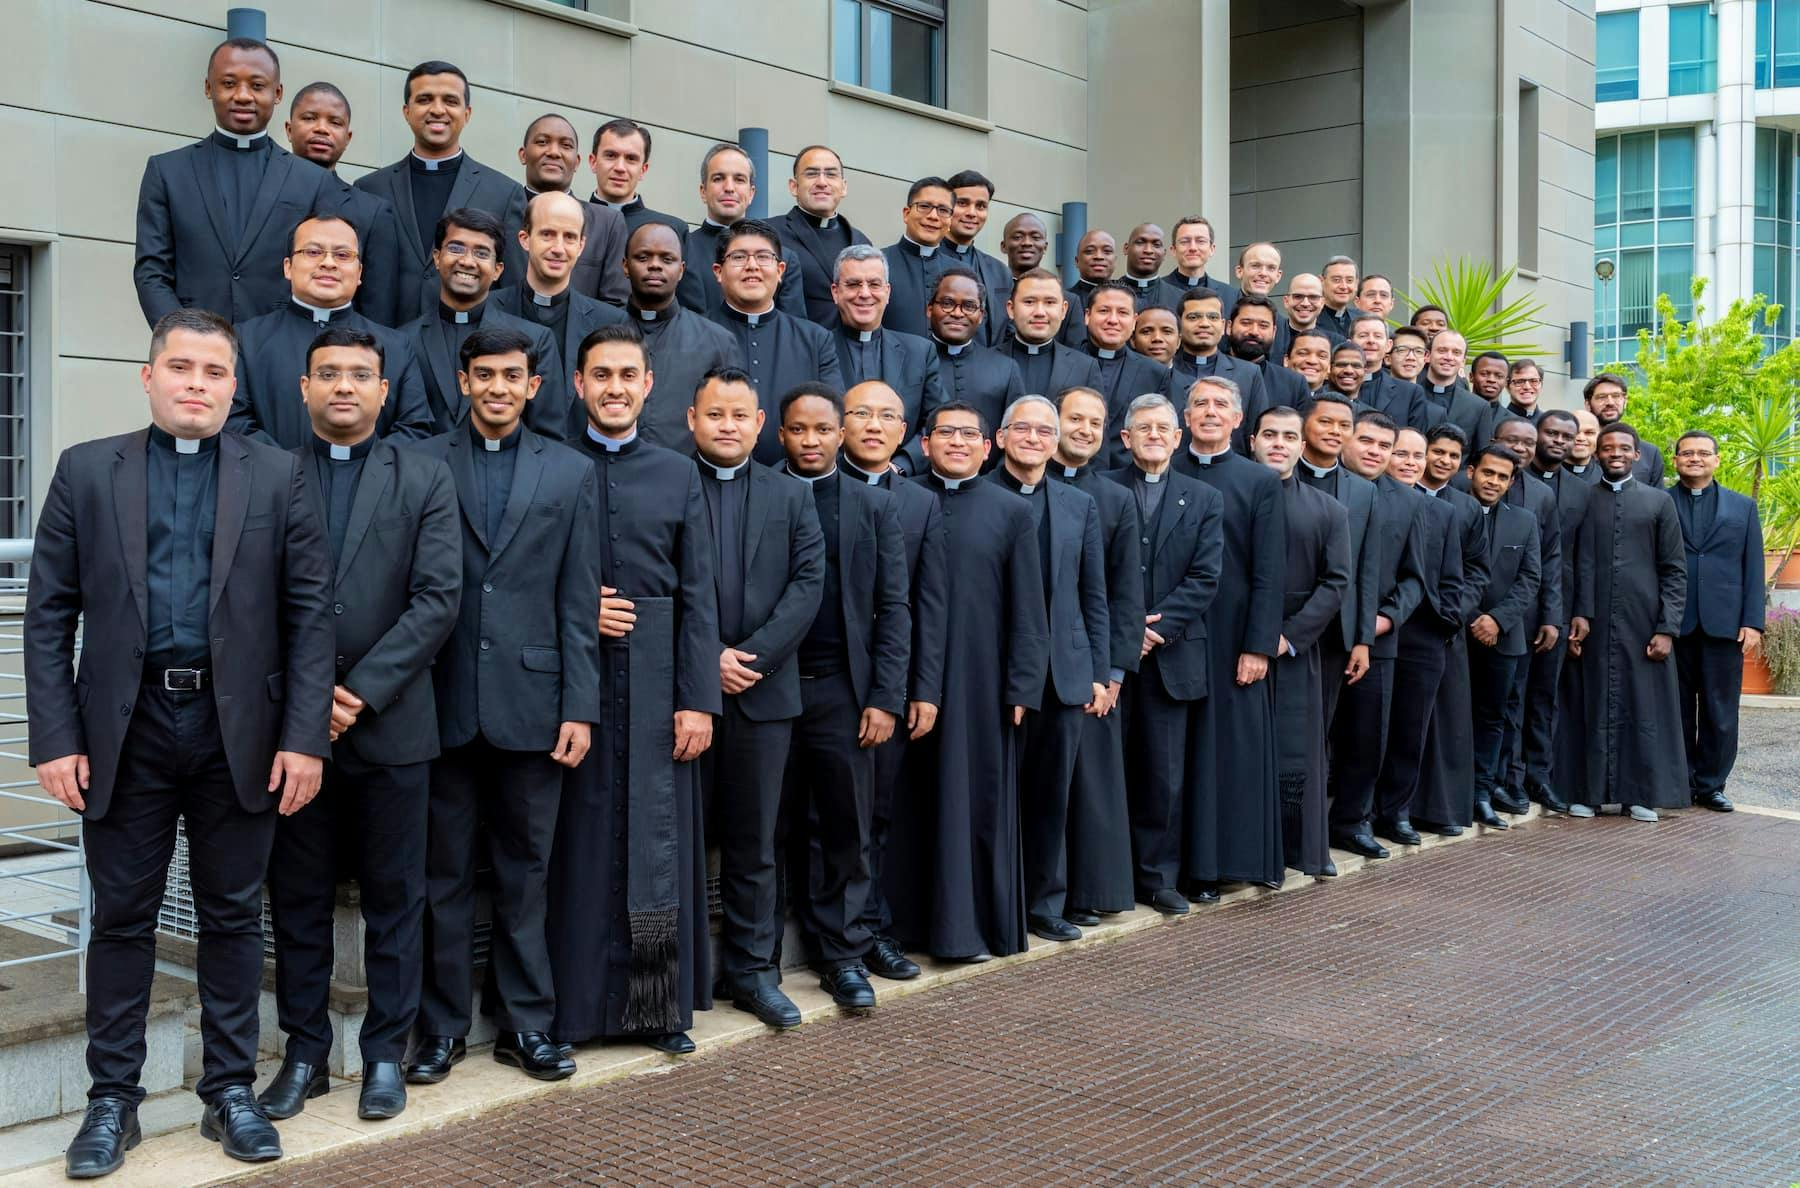 Altomonte priests group picture